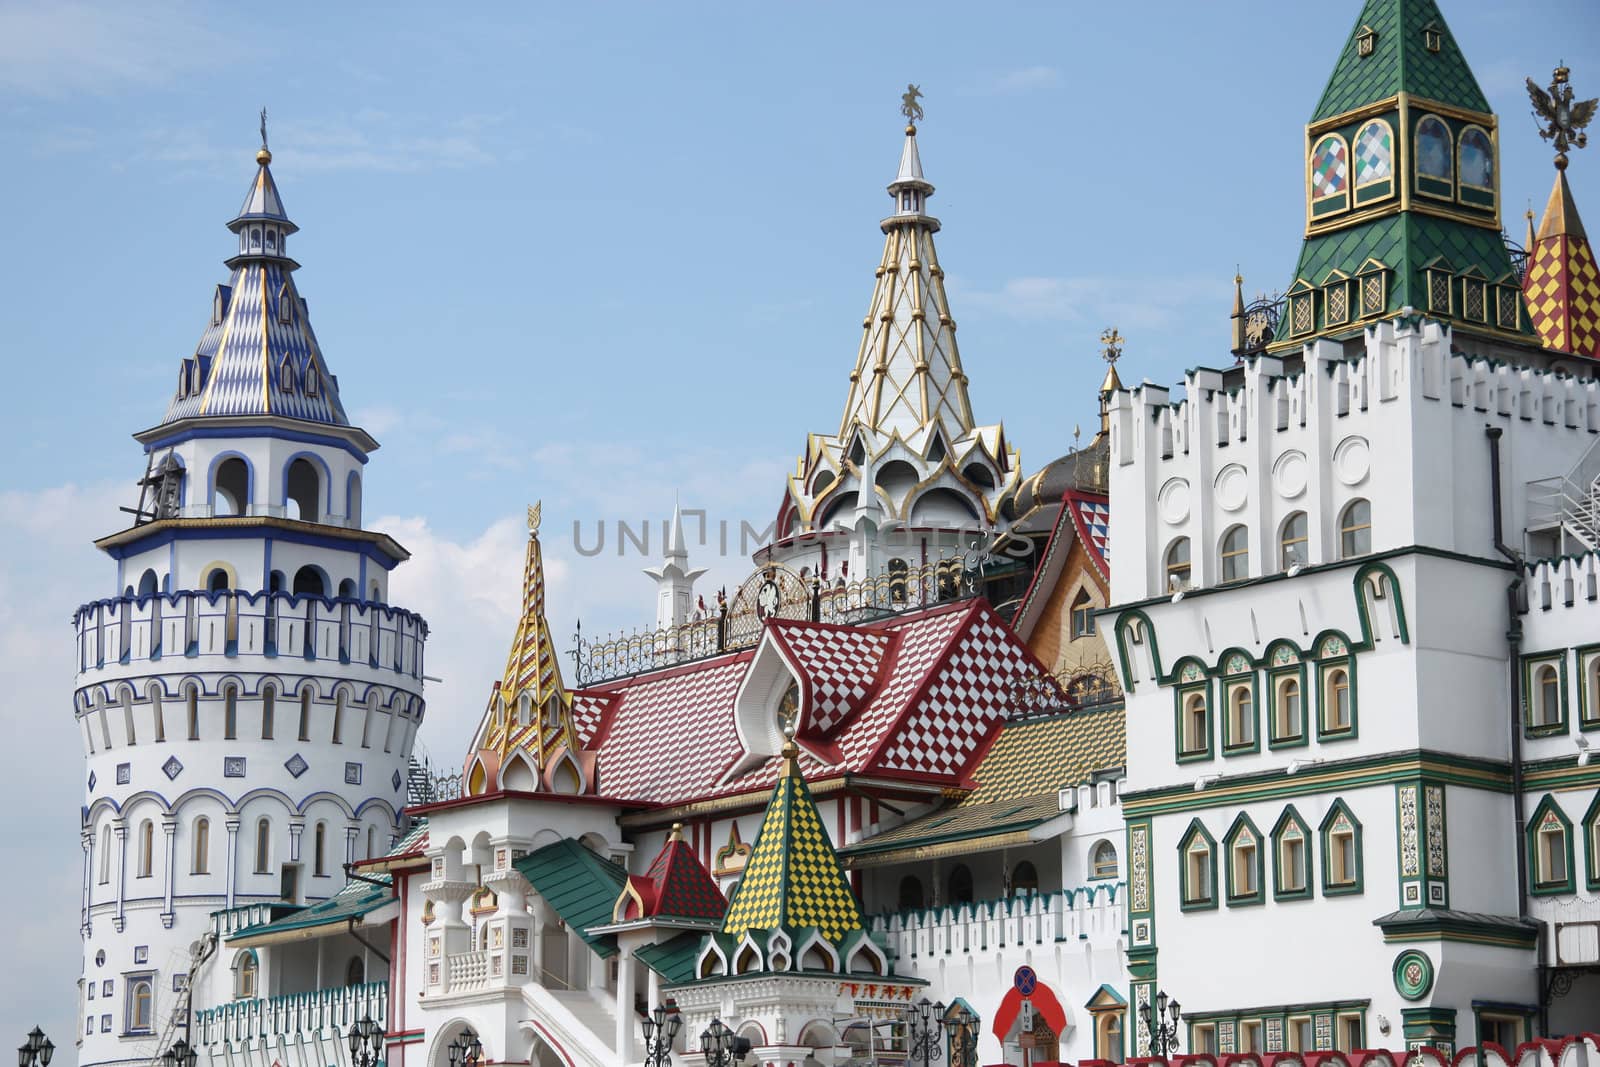 Izmaylovskiy Kremlin in Moscow, imitation of ancient Russian architecture